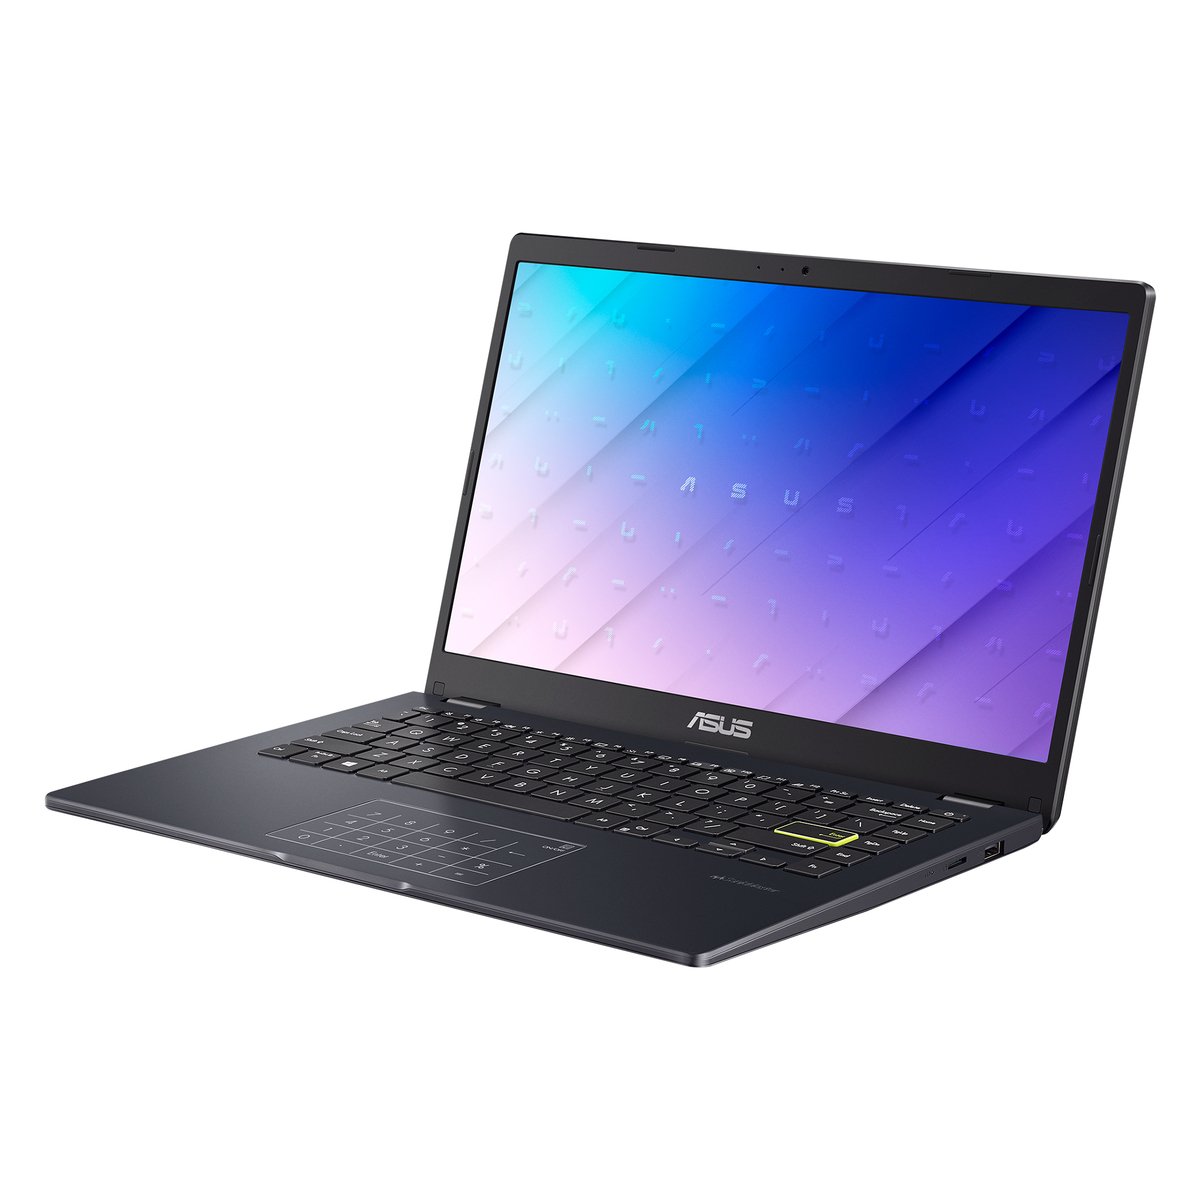 Asus Laptop E410ma Ek005t Laptop Intel Celeron N4020 4gb Ram 128gbstorage Intel Uhd 3117